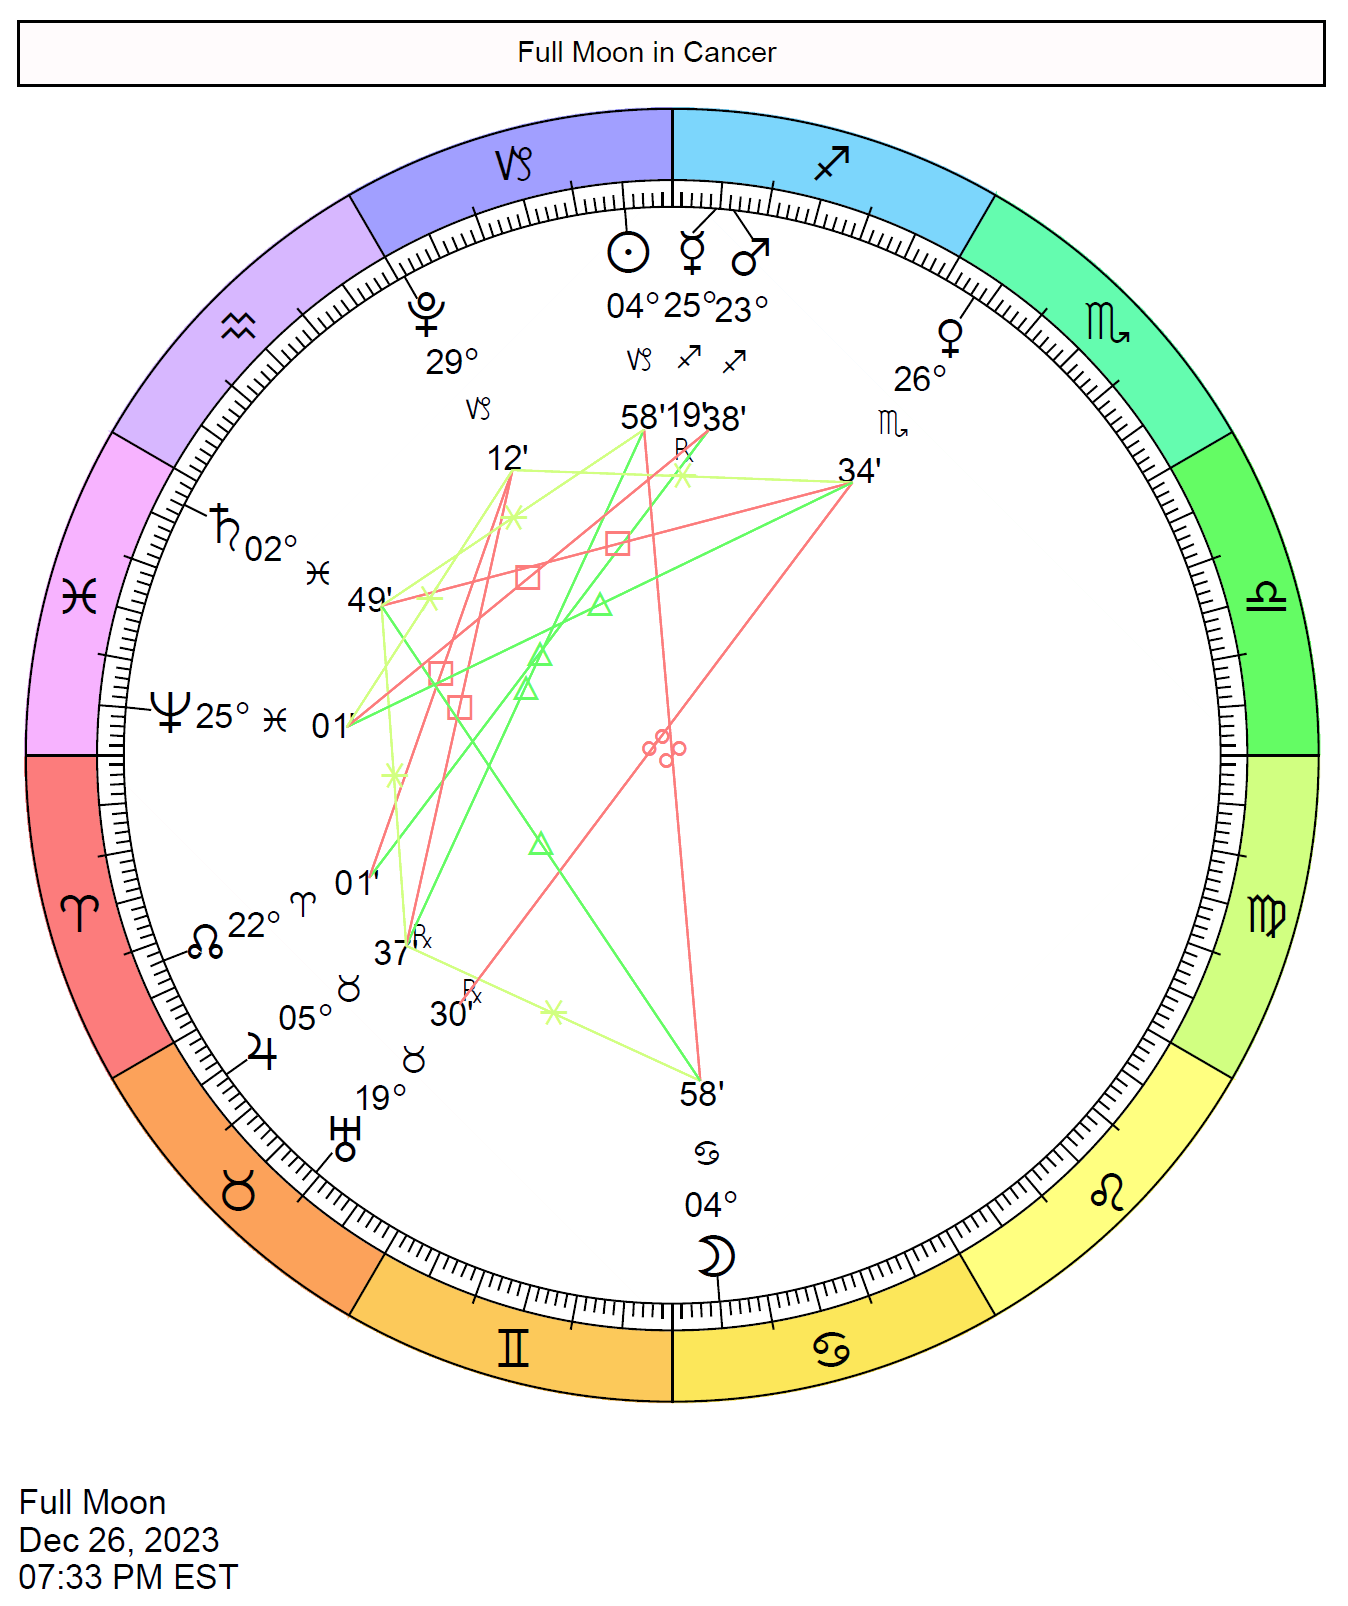 Full Moon on December 26, 2023 Cafe Astrology